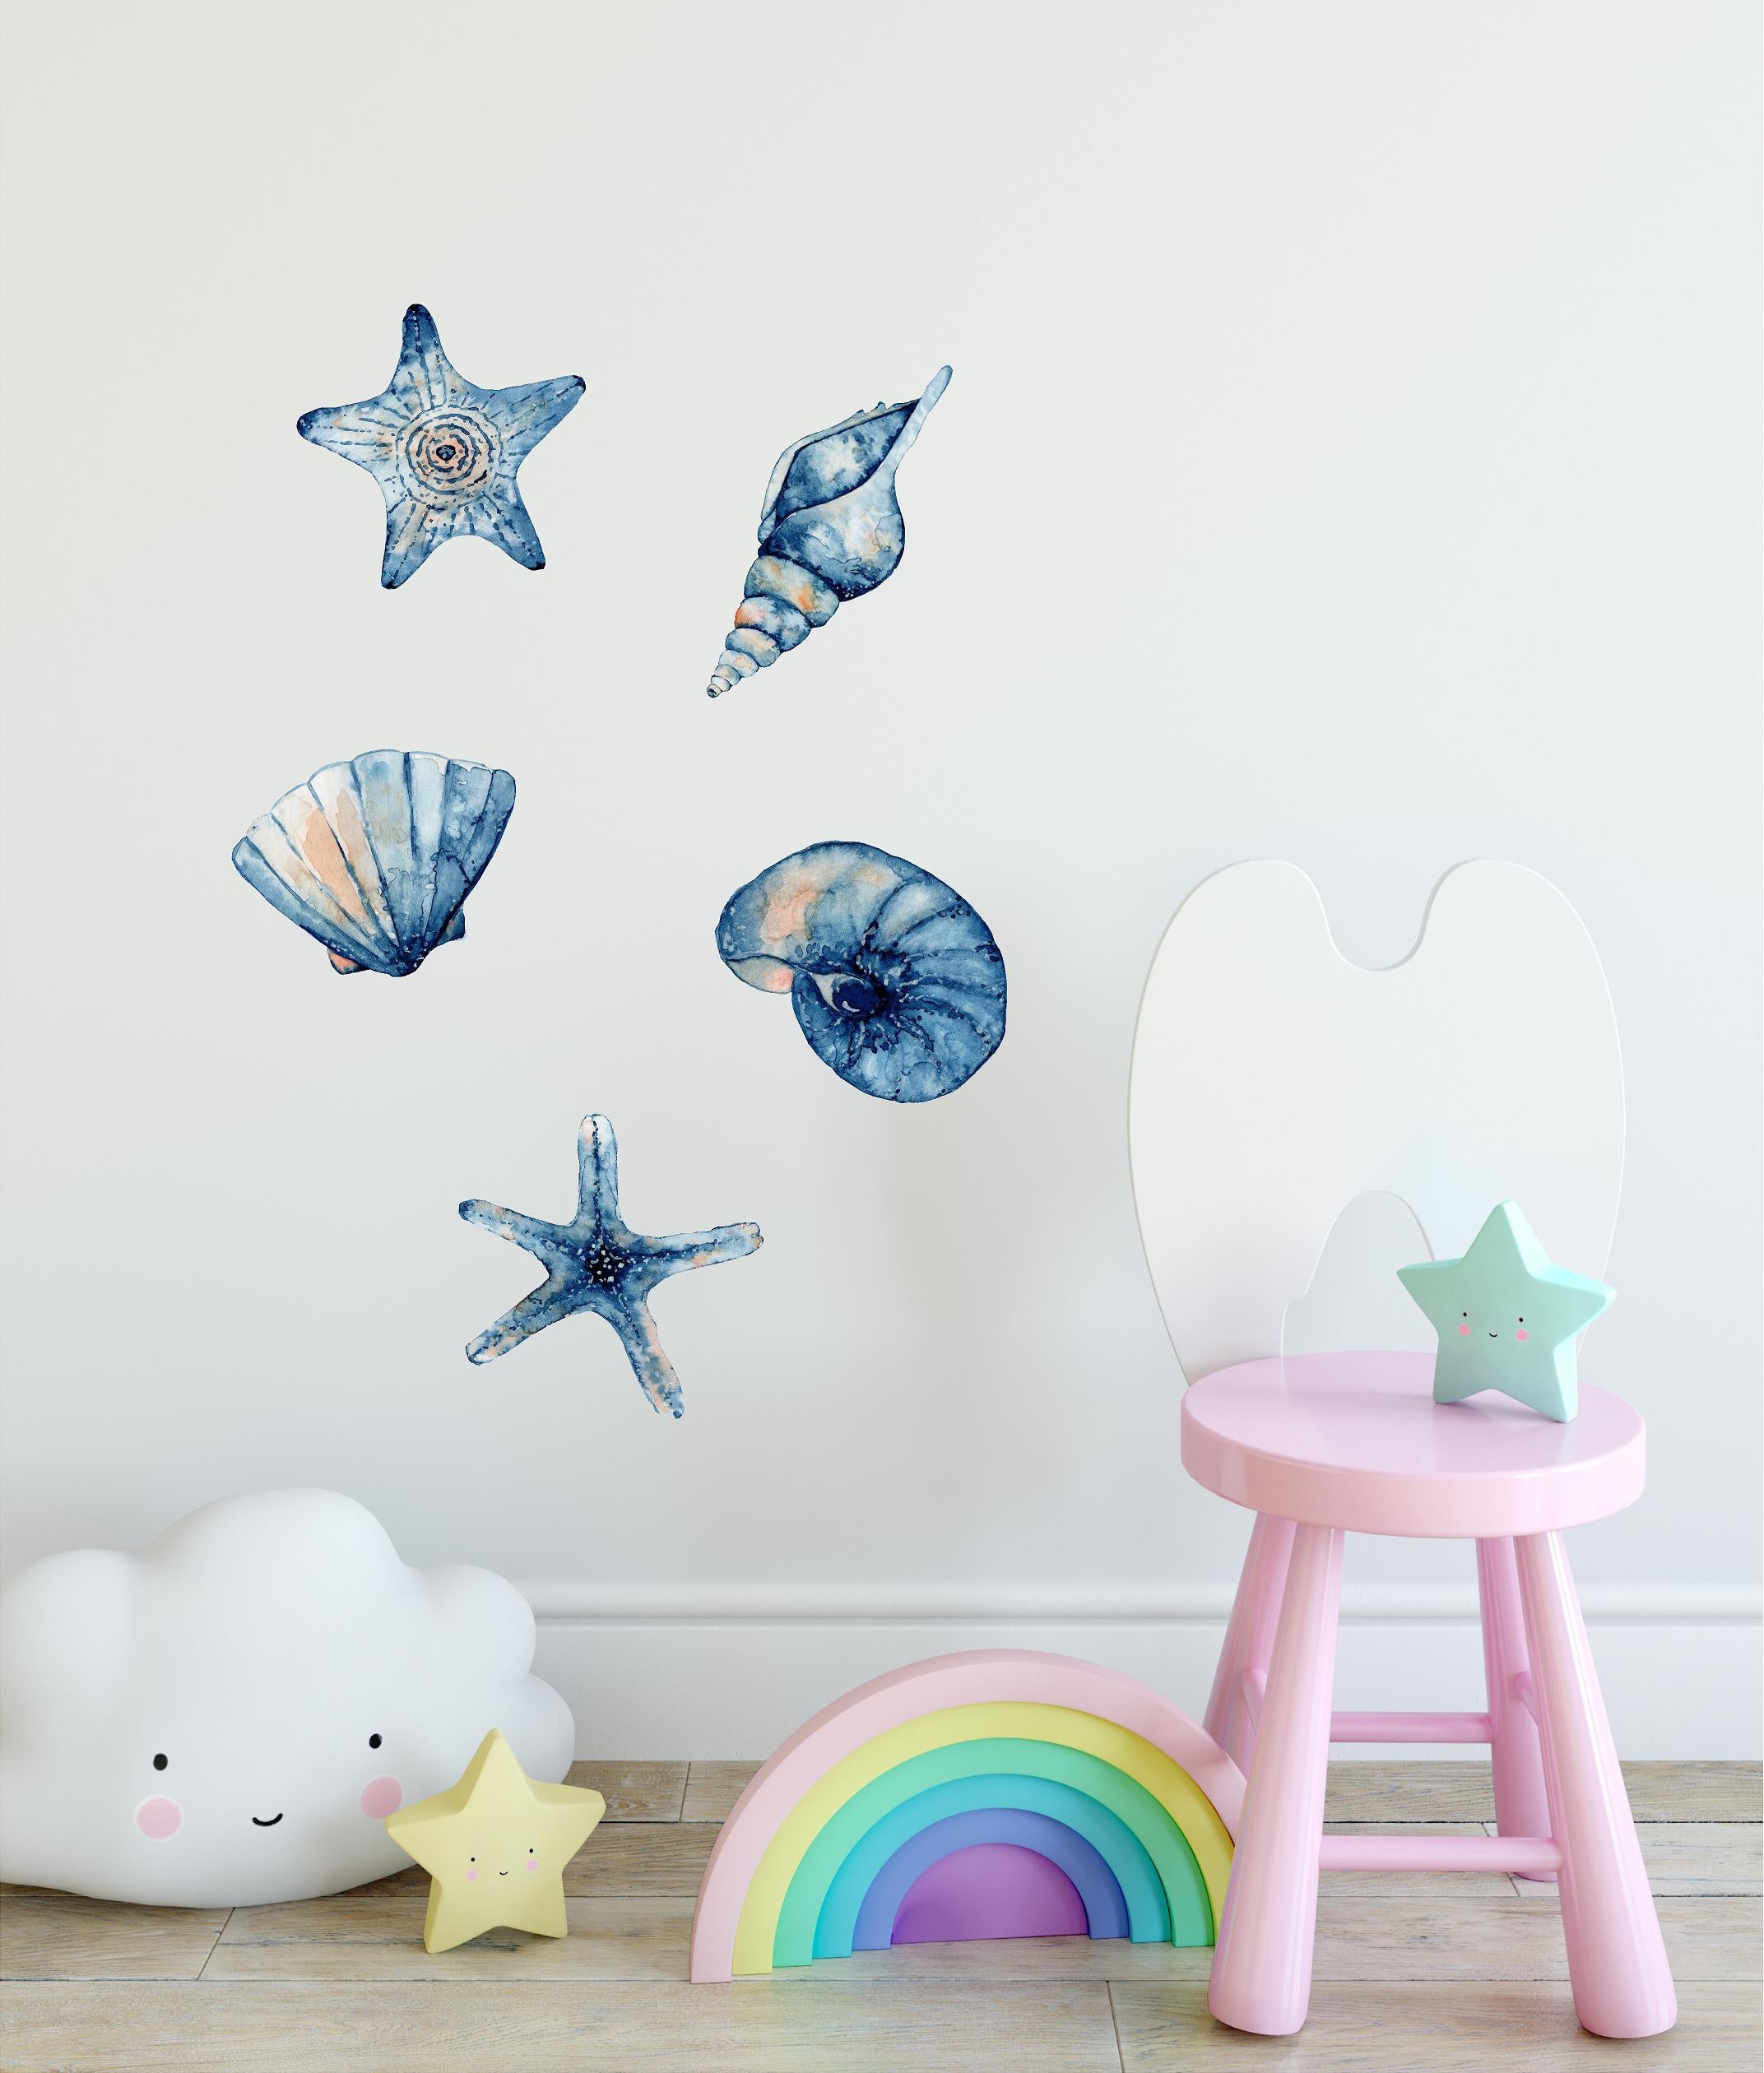 Navy Blue Seashells & Starfish Wall Decal Ocean Sea Life Removable Fabric Wall Sticker | DecalBaby